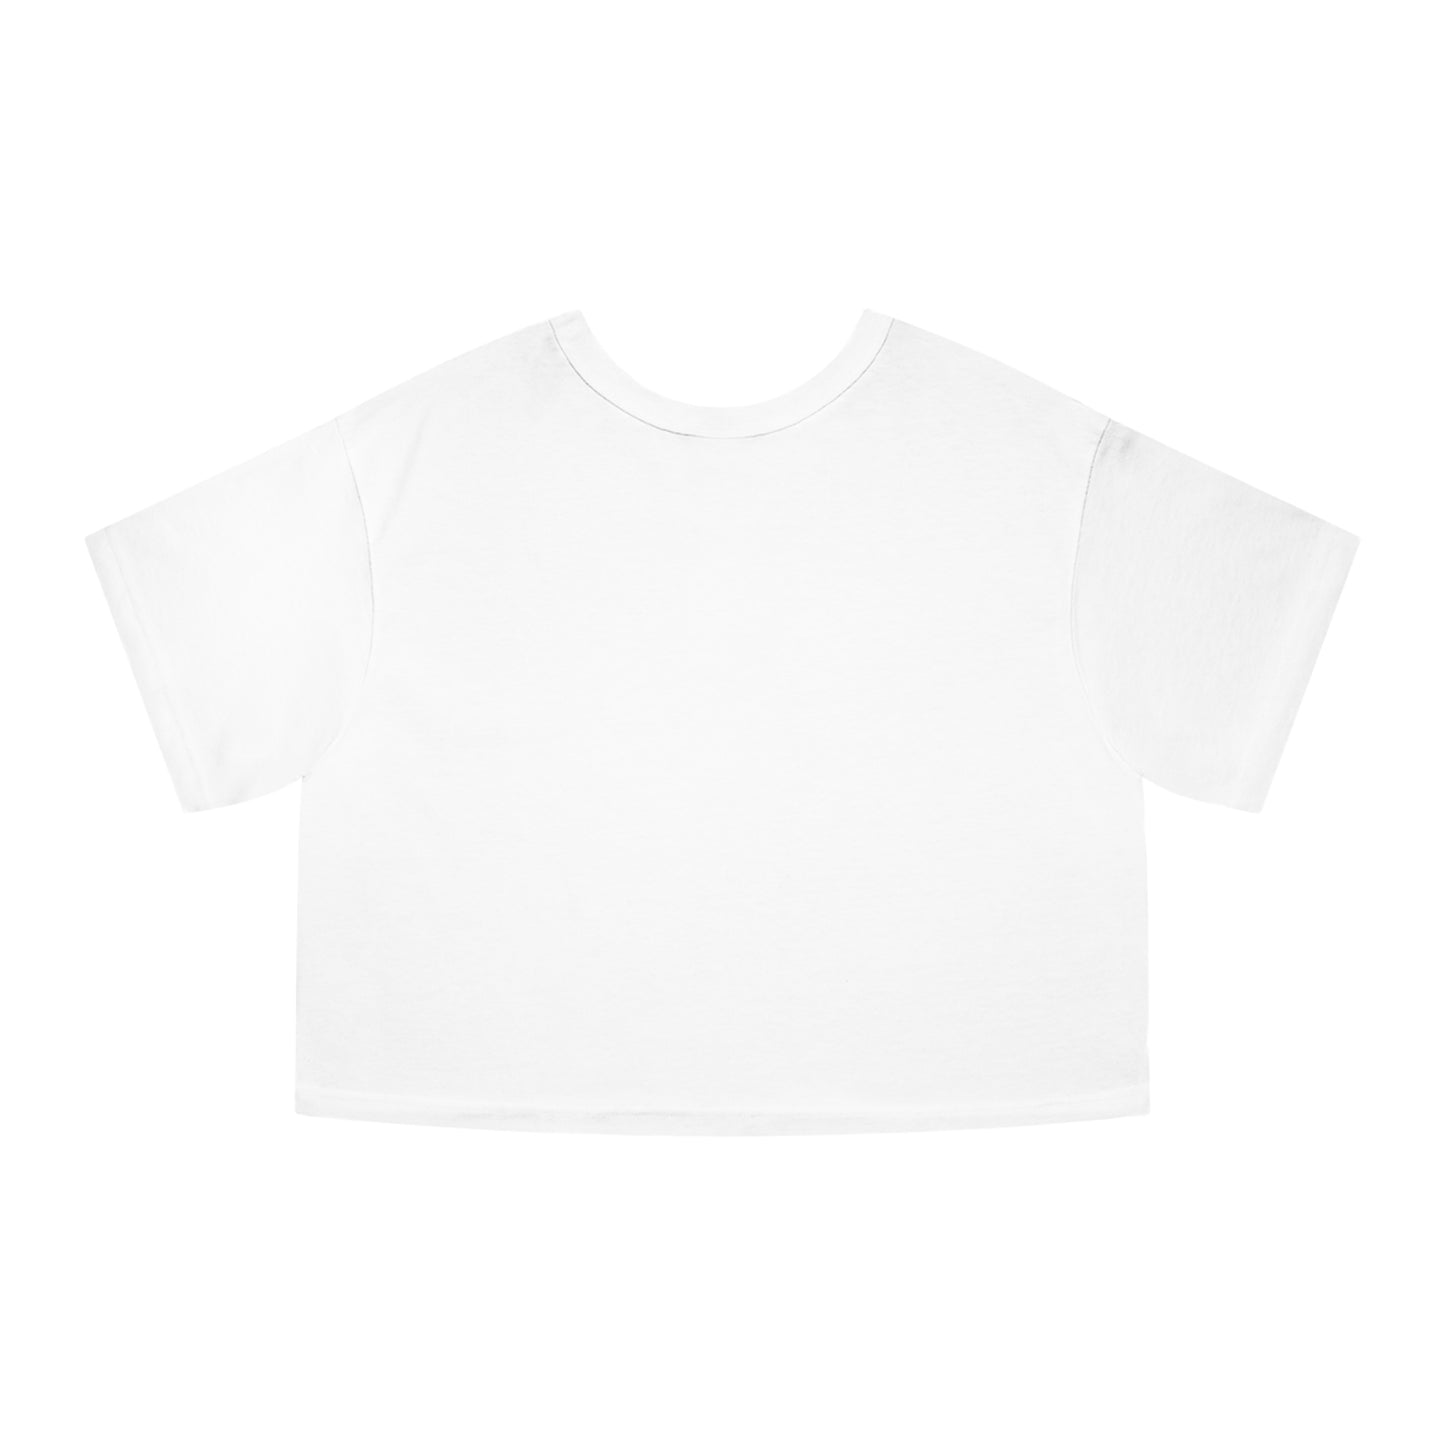 Moore Mafia Cropped T-Shirt